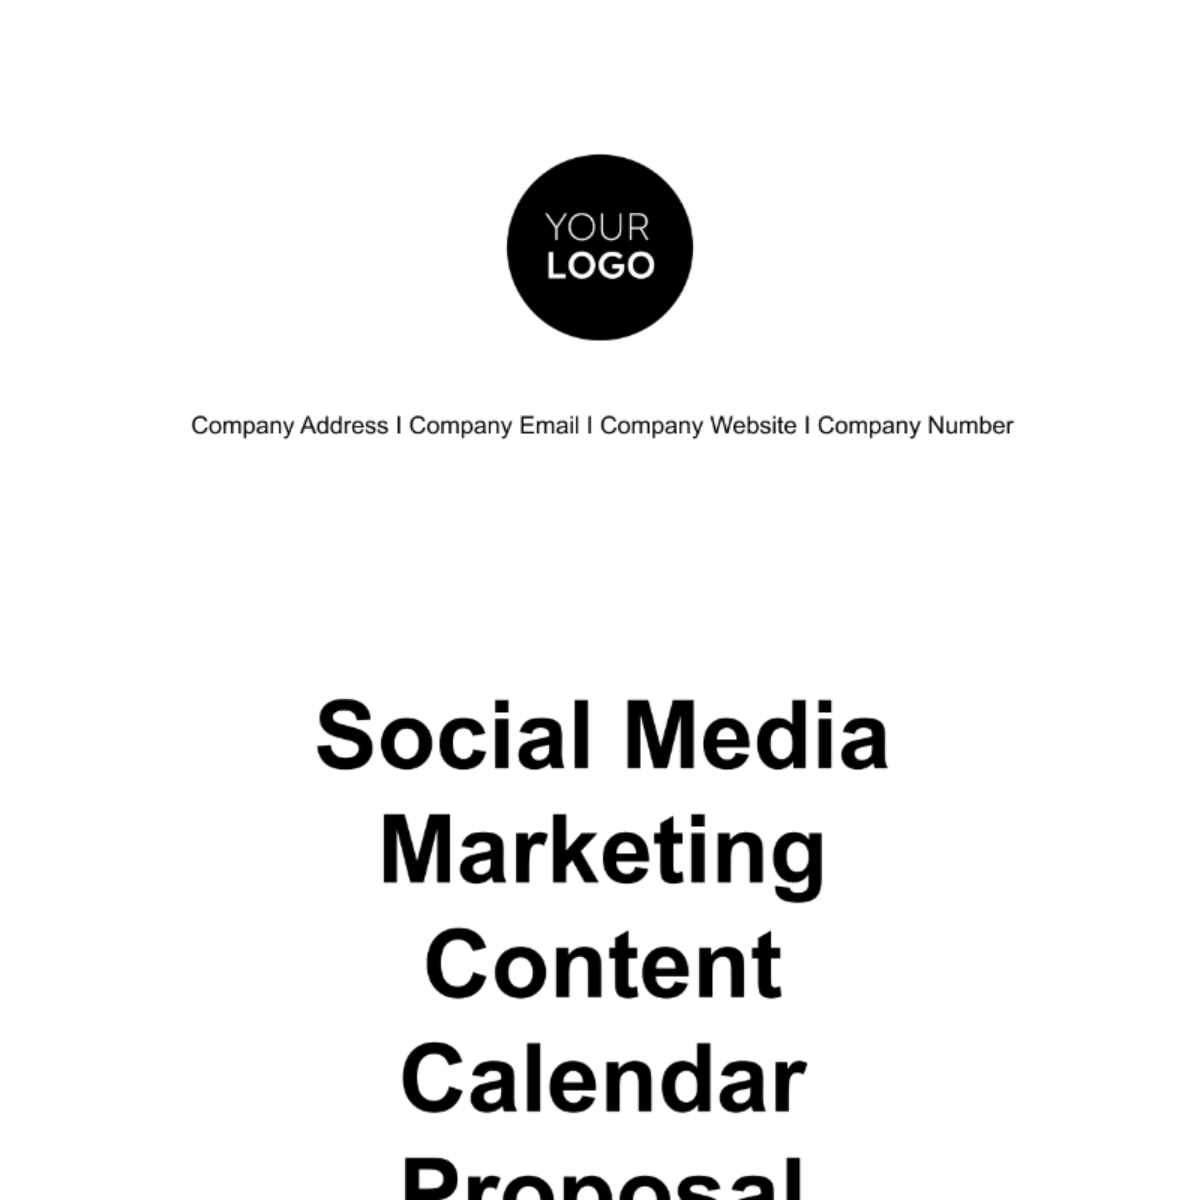 Social Media Marketing Content Calendar Proposal Template